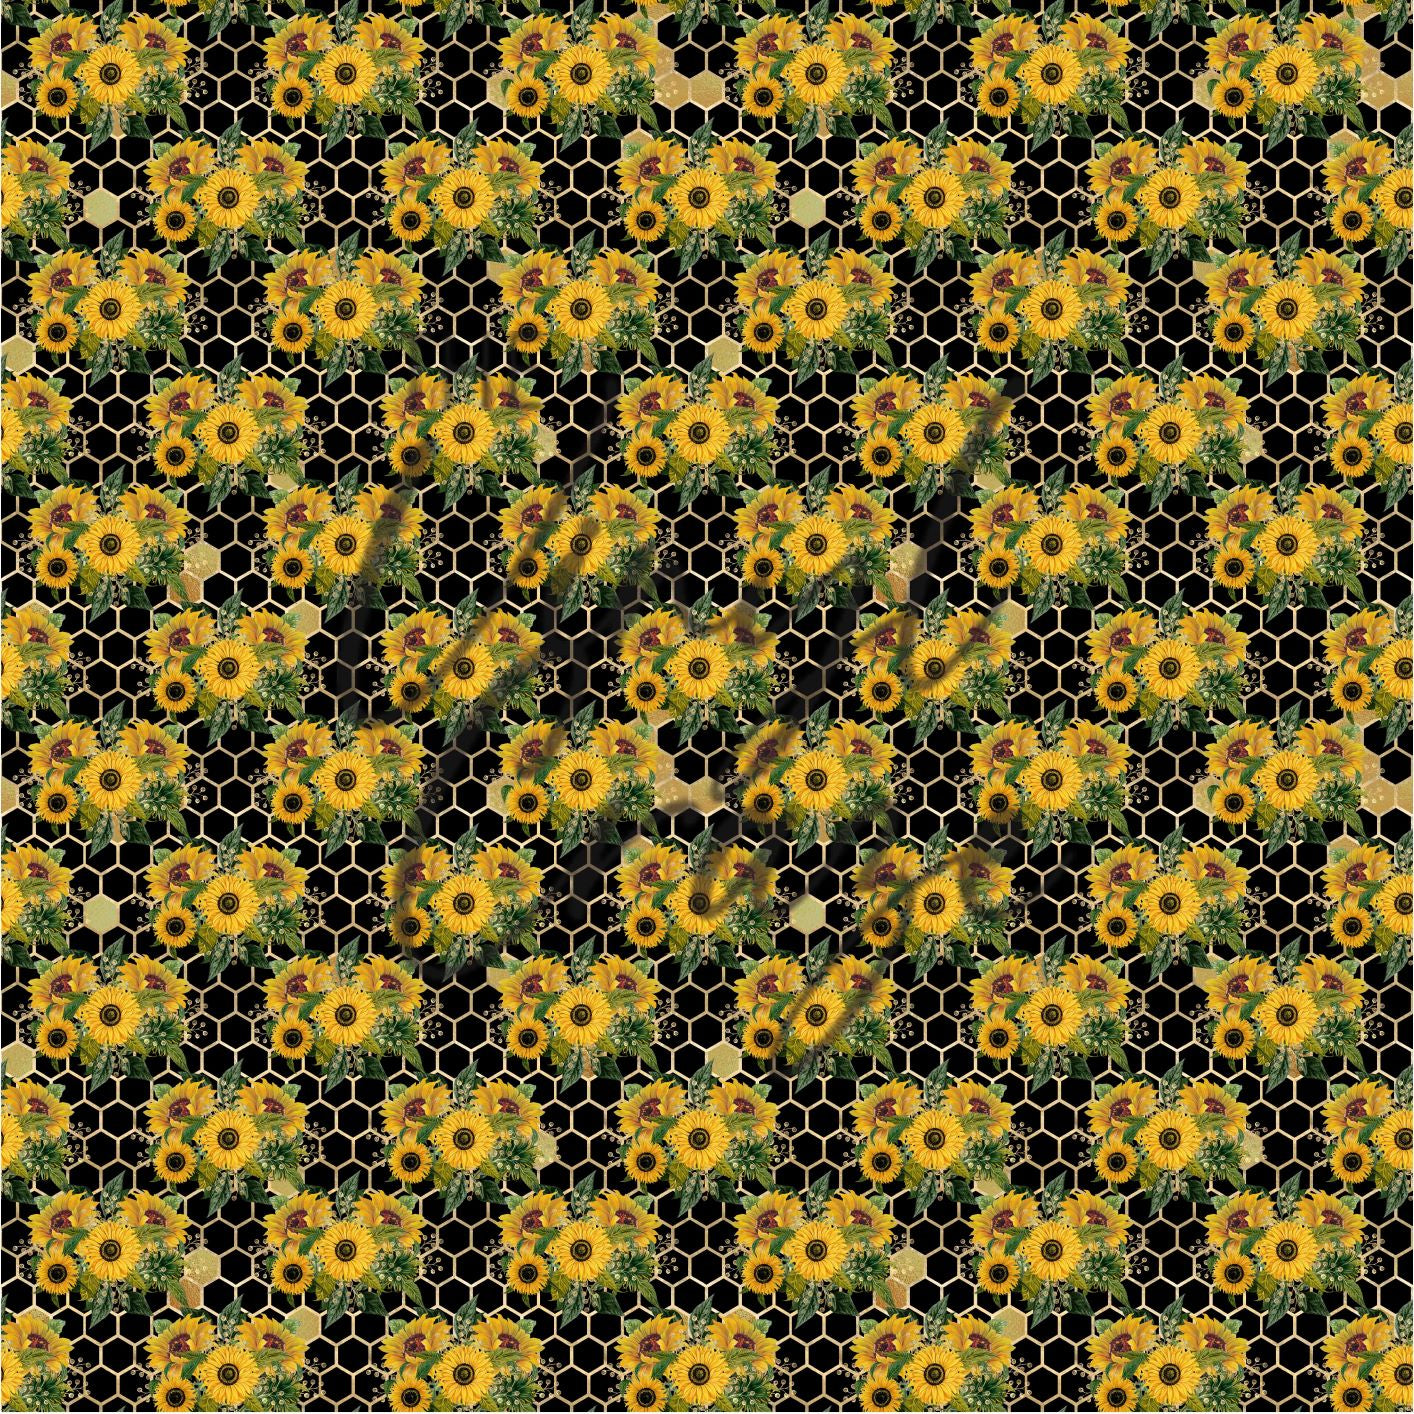 Black Beehive Sunflowers - Adhesive Vinyl